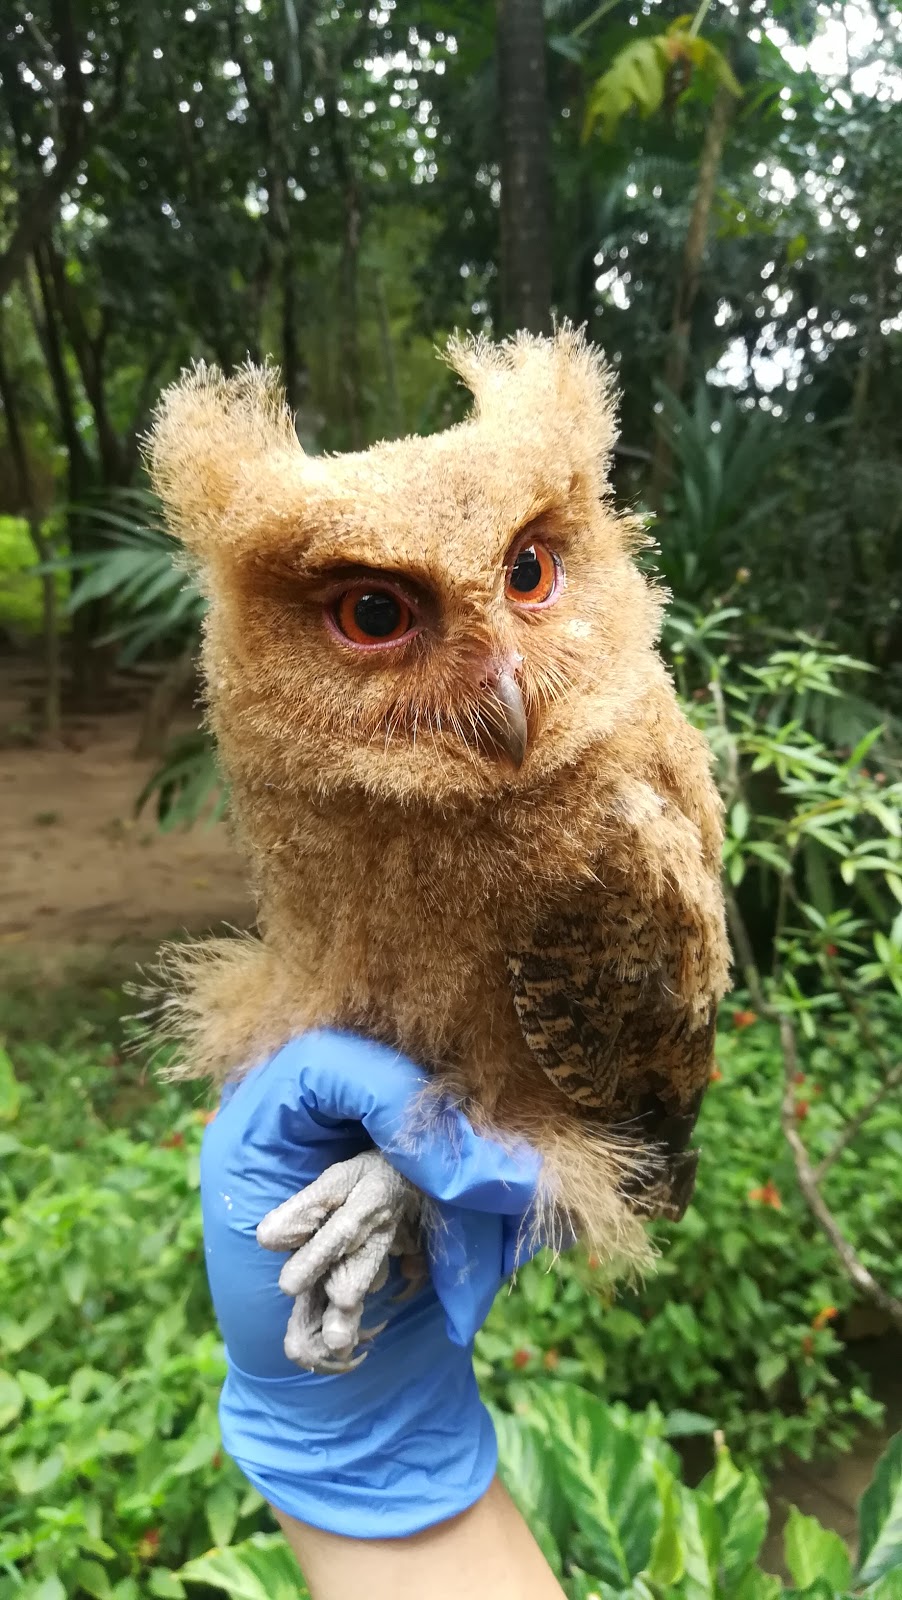 Philippine Scops Owl found in DLSU-Dasmariñas. Image: courtesy of Andrei Lee